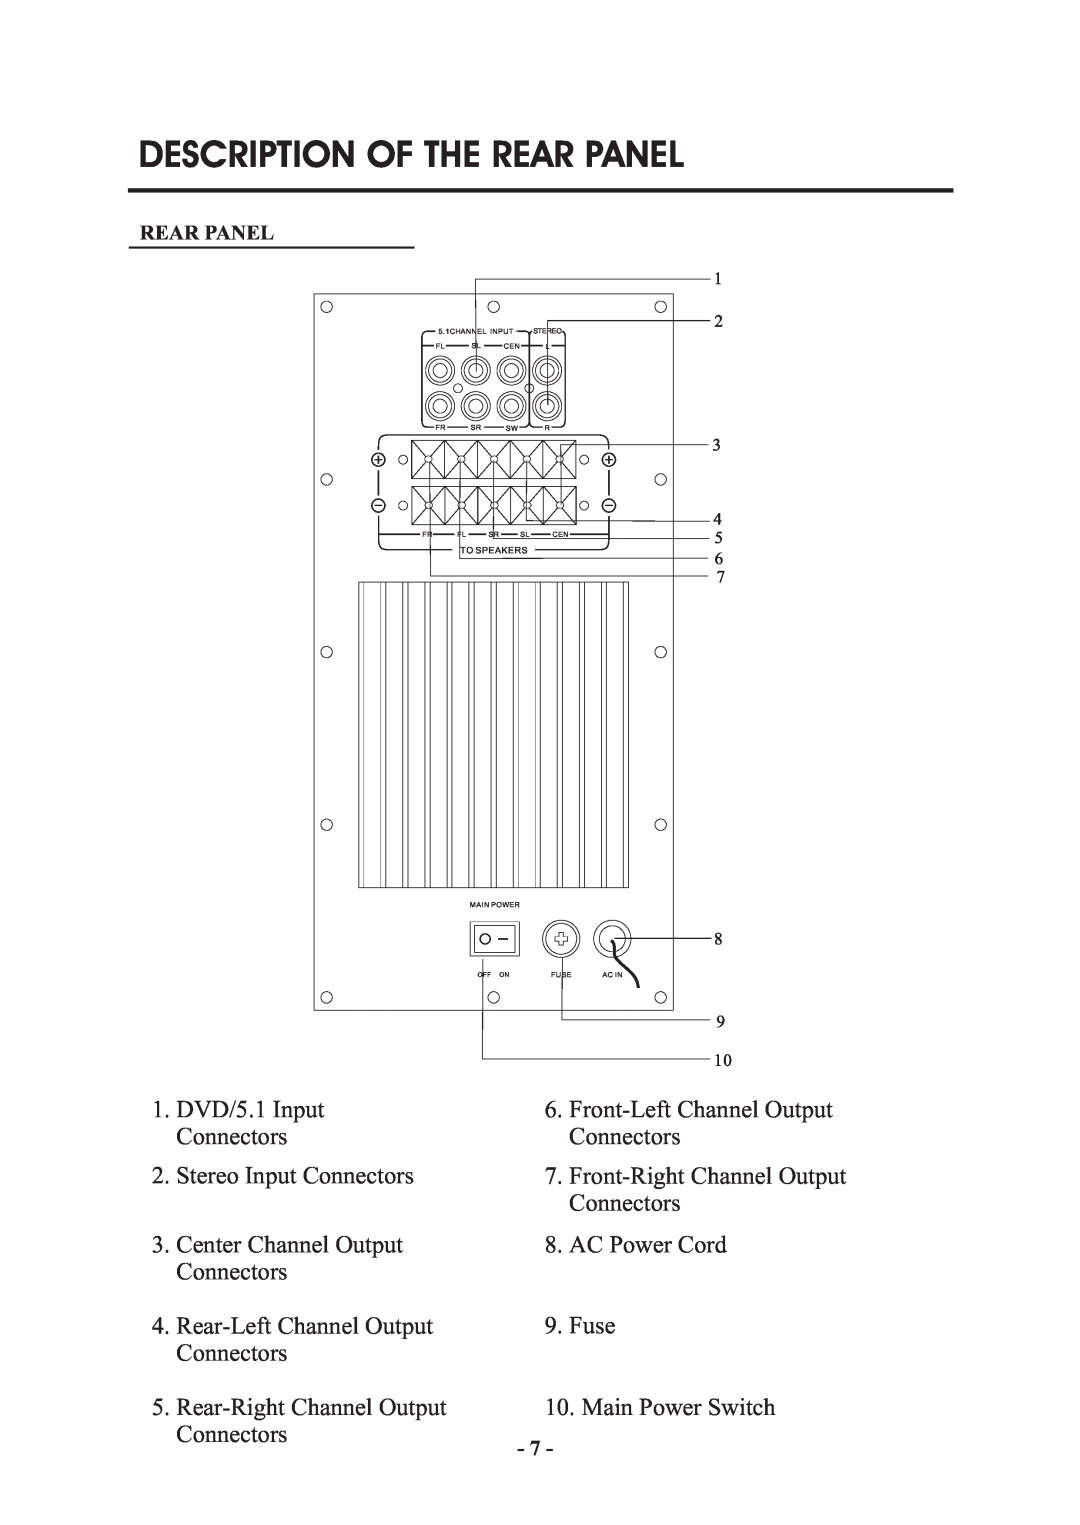 MidiLand 750 manual Description Of The Rear Panel, DVD/5.1 Input 